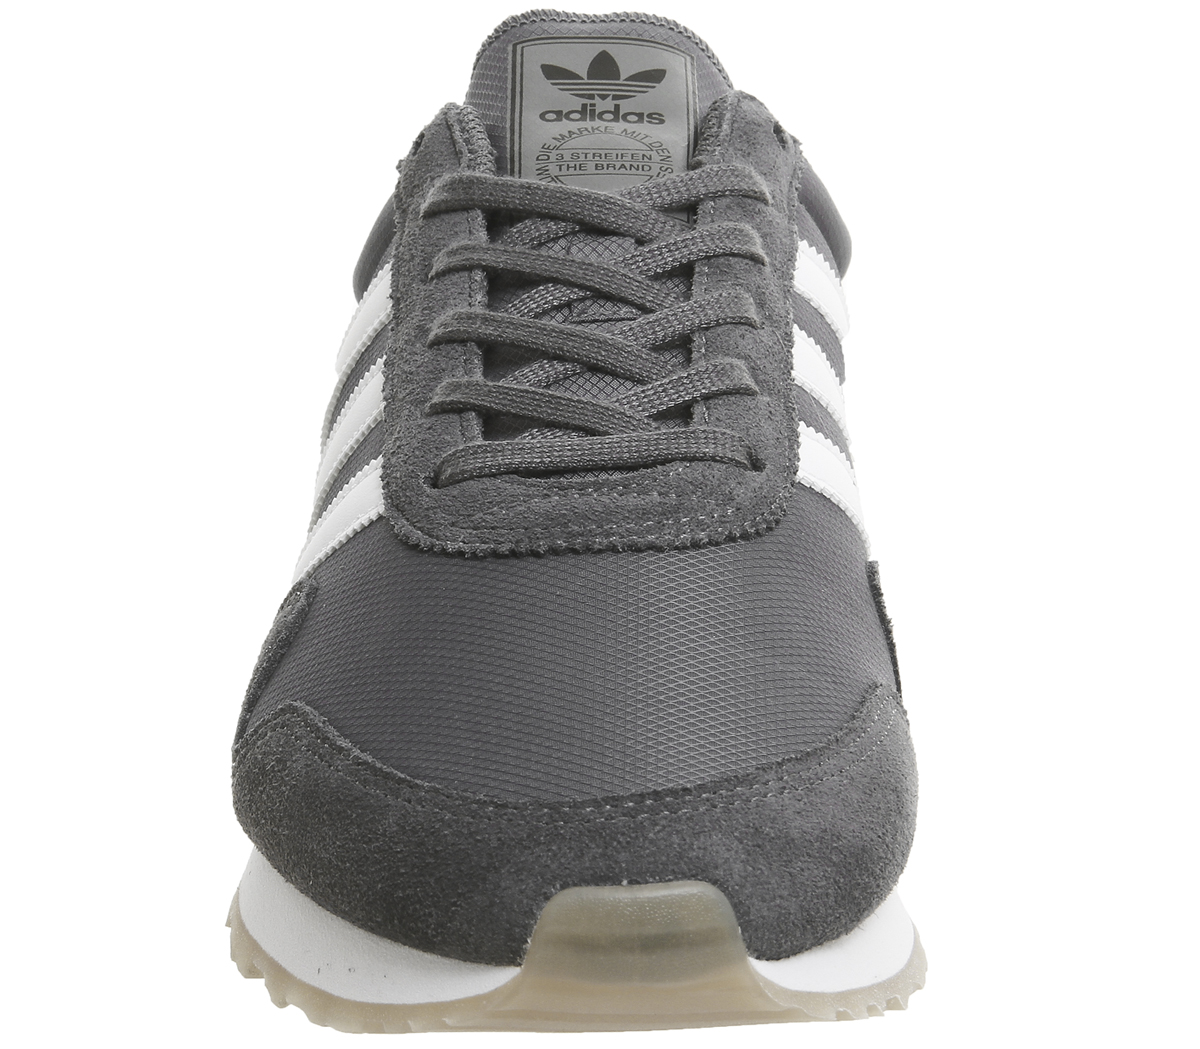 adidas haven grey white